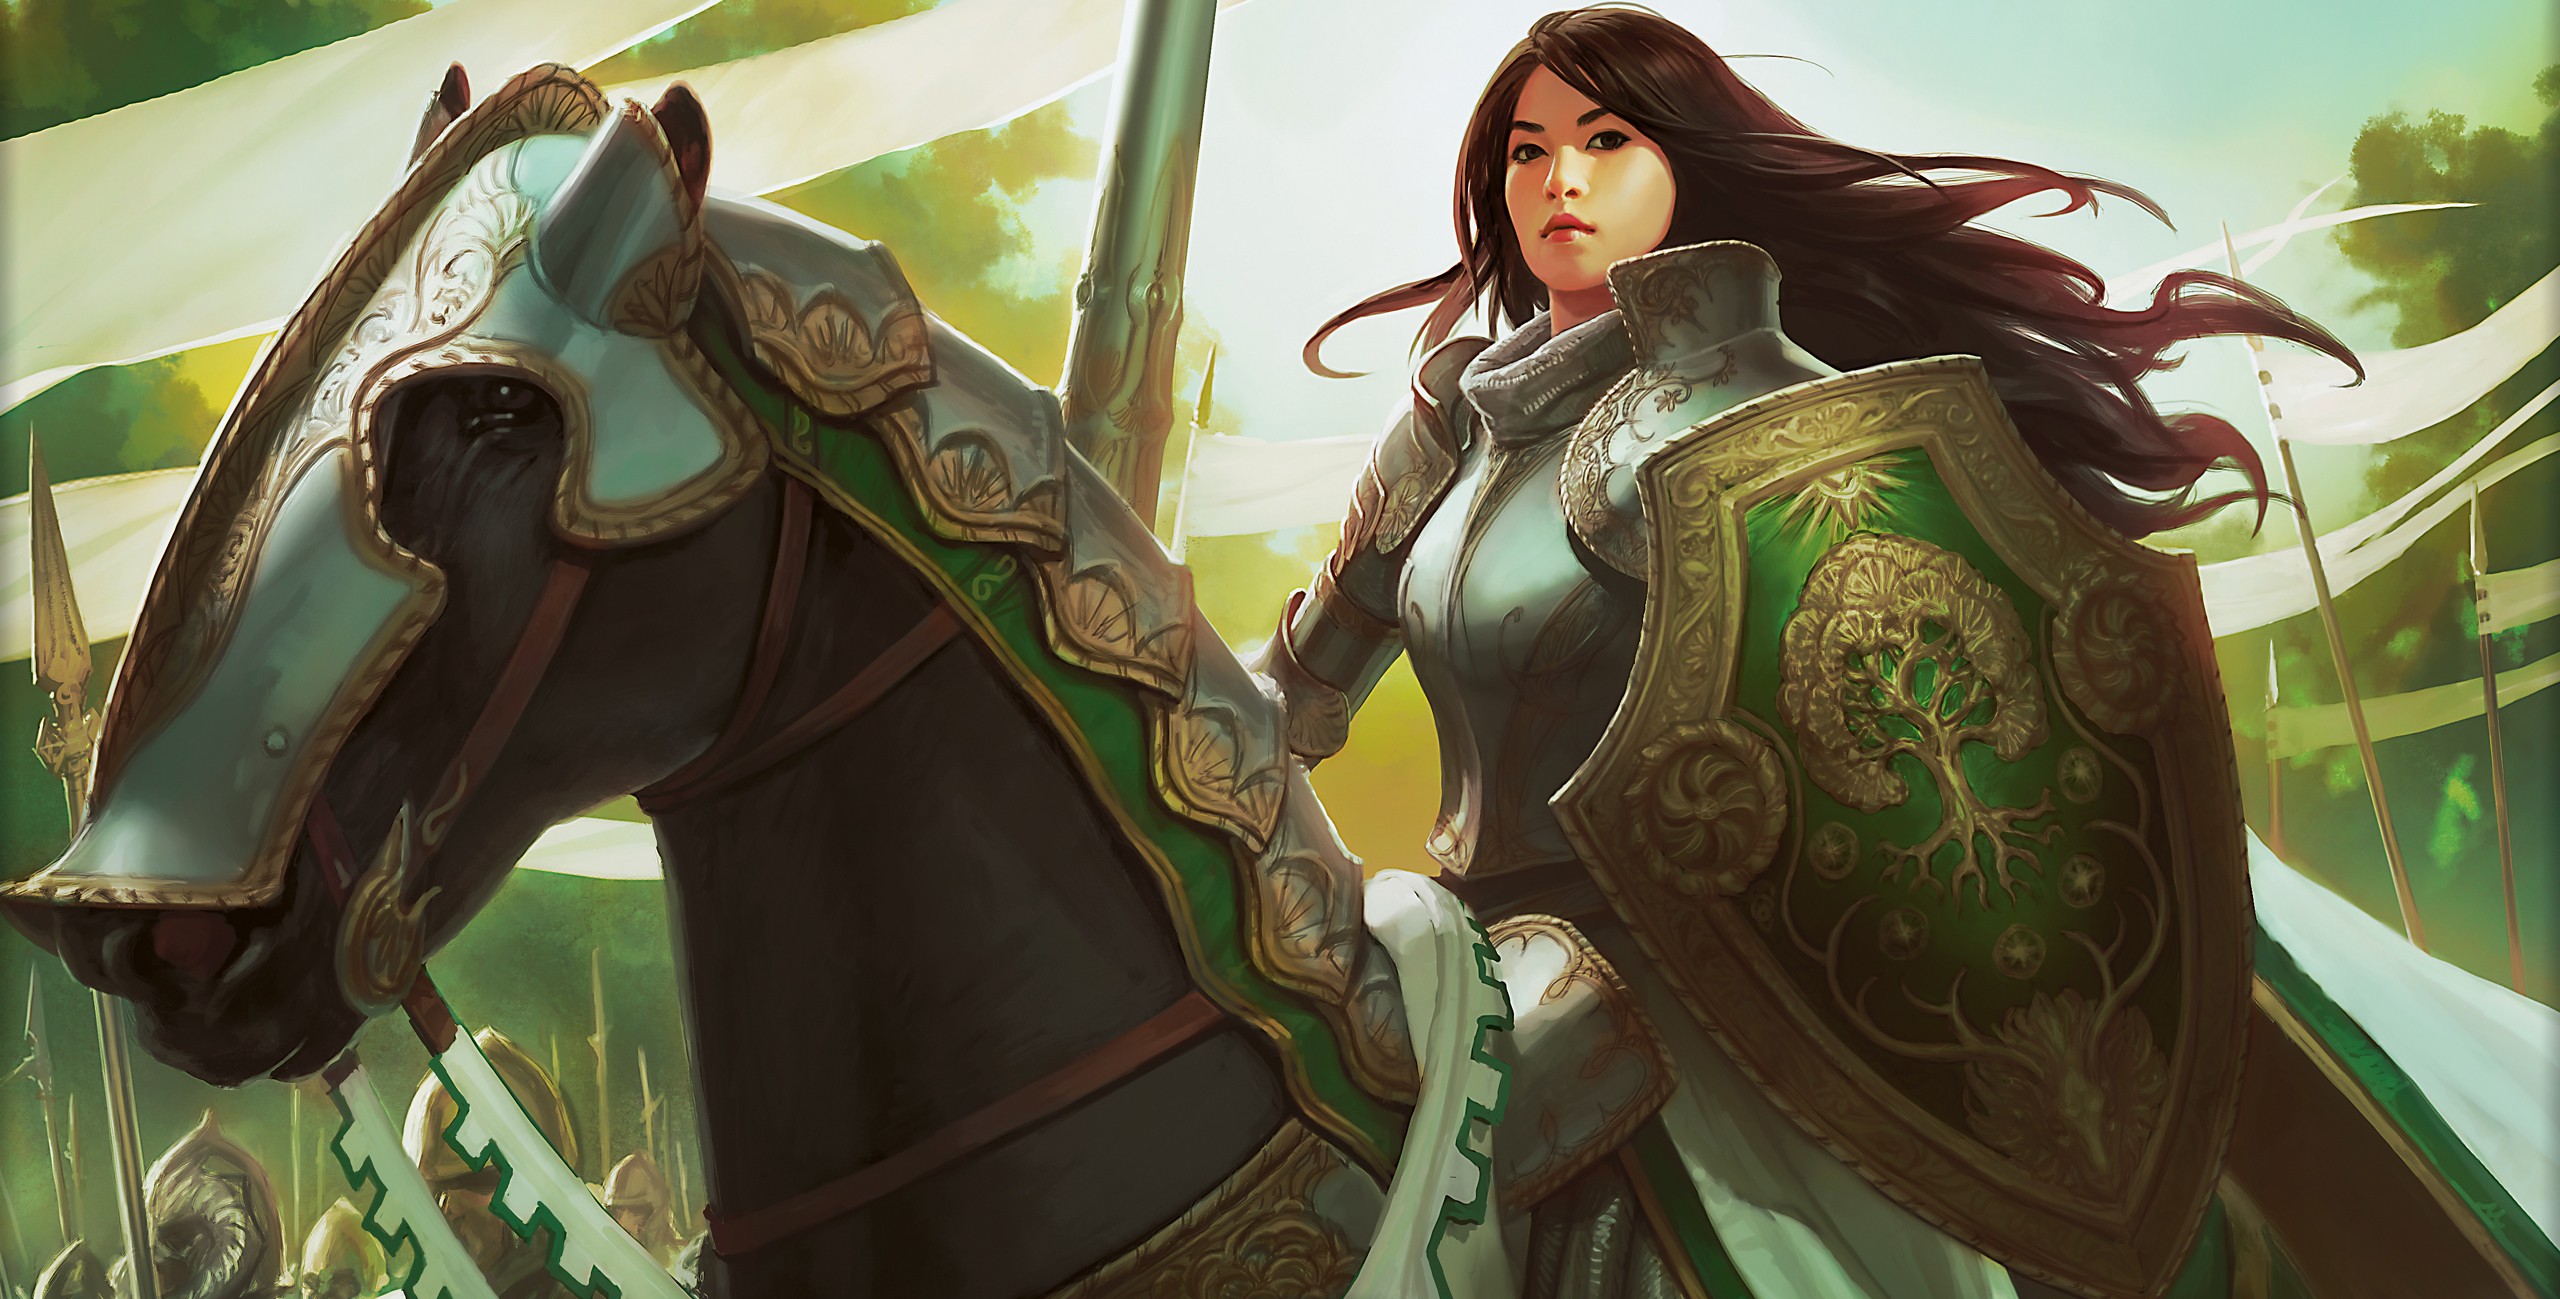 General 2560x1299 fantasy art Magic: The Gathering fantasy girl horse shield long hair Trading Card Games women with horse armor fantasy armor women digital art